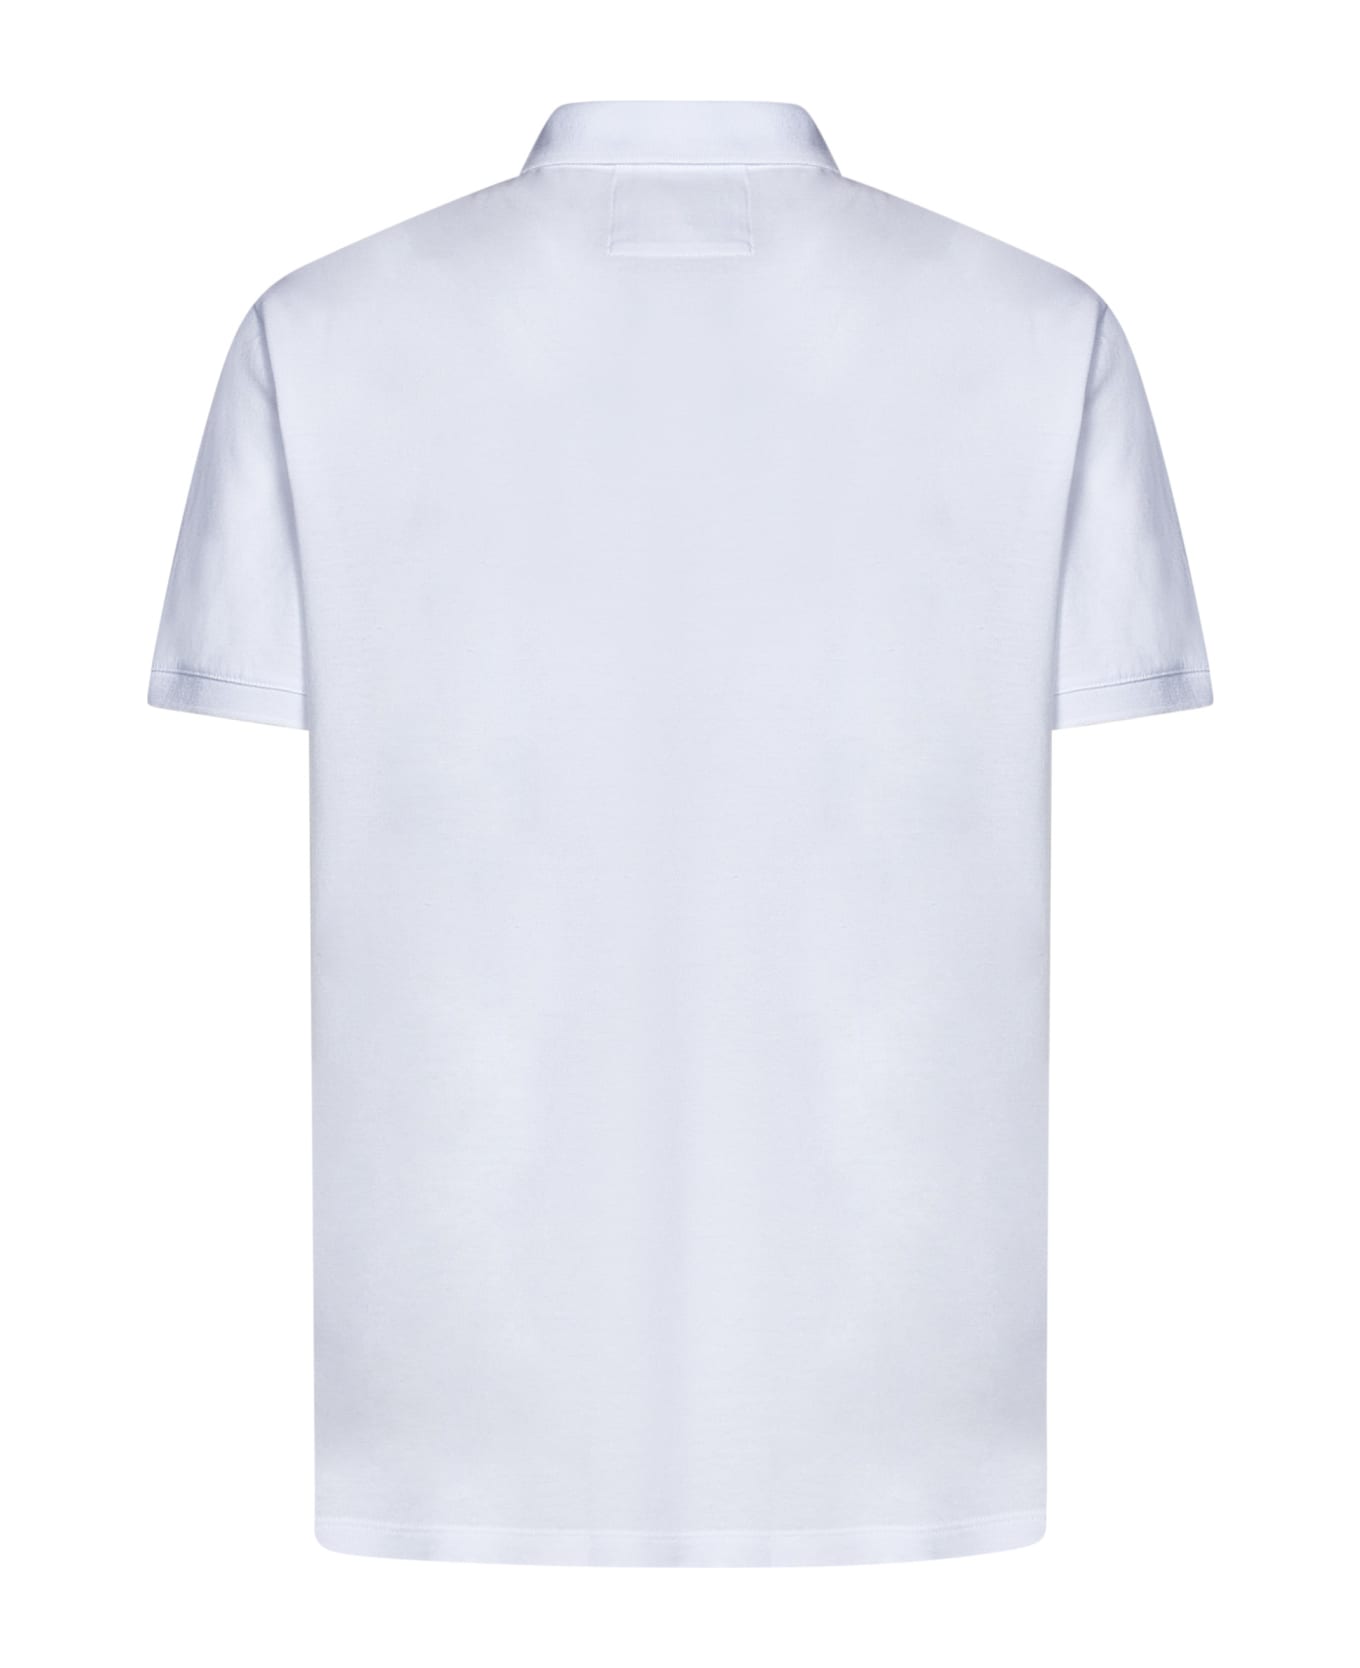 Emporio Armani Polo Shirt - Bianco ottico